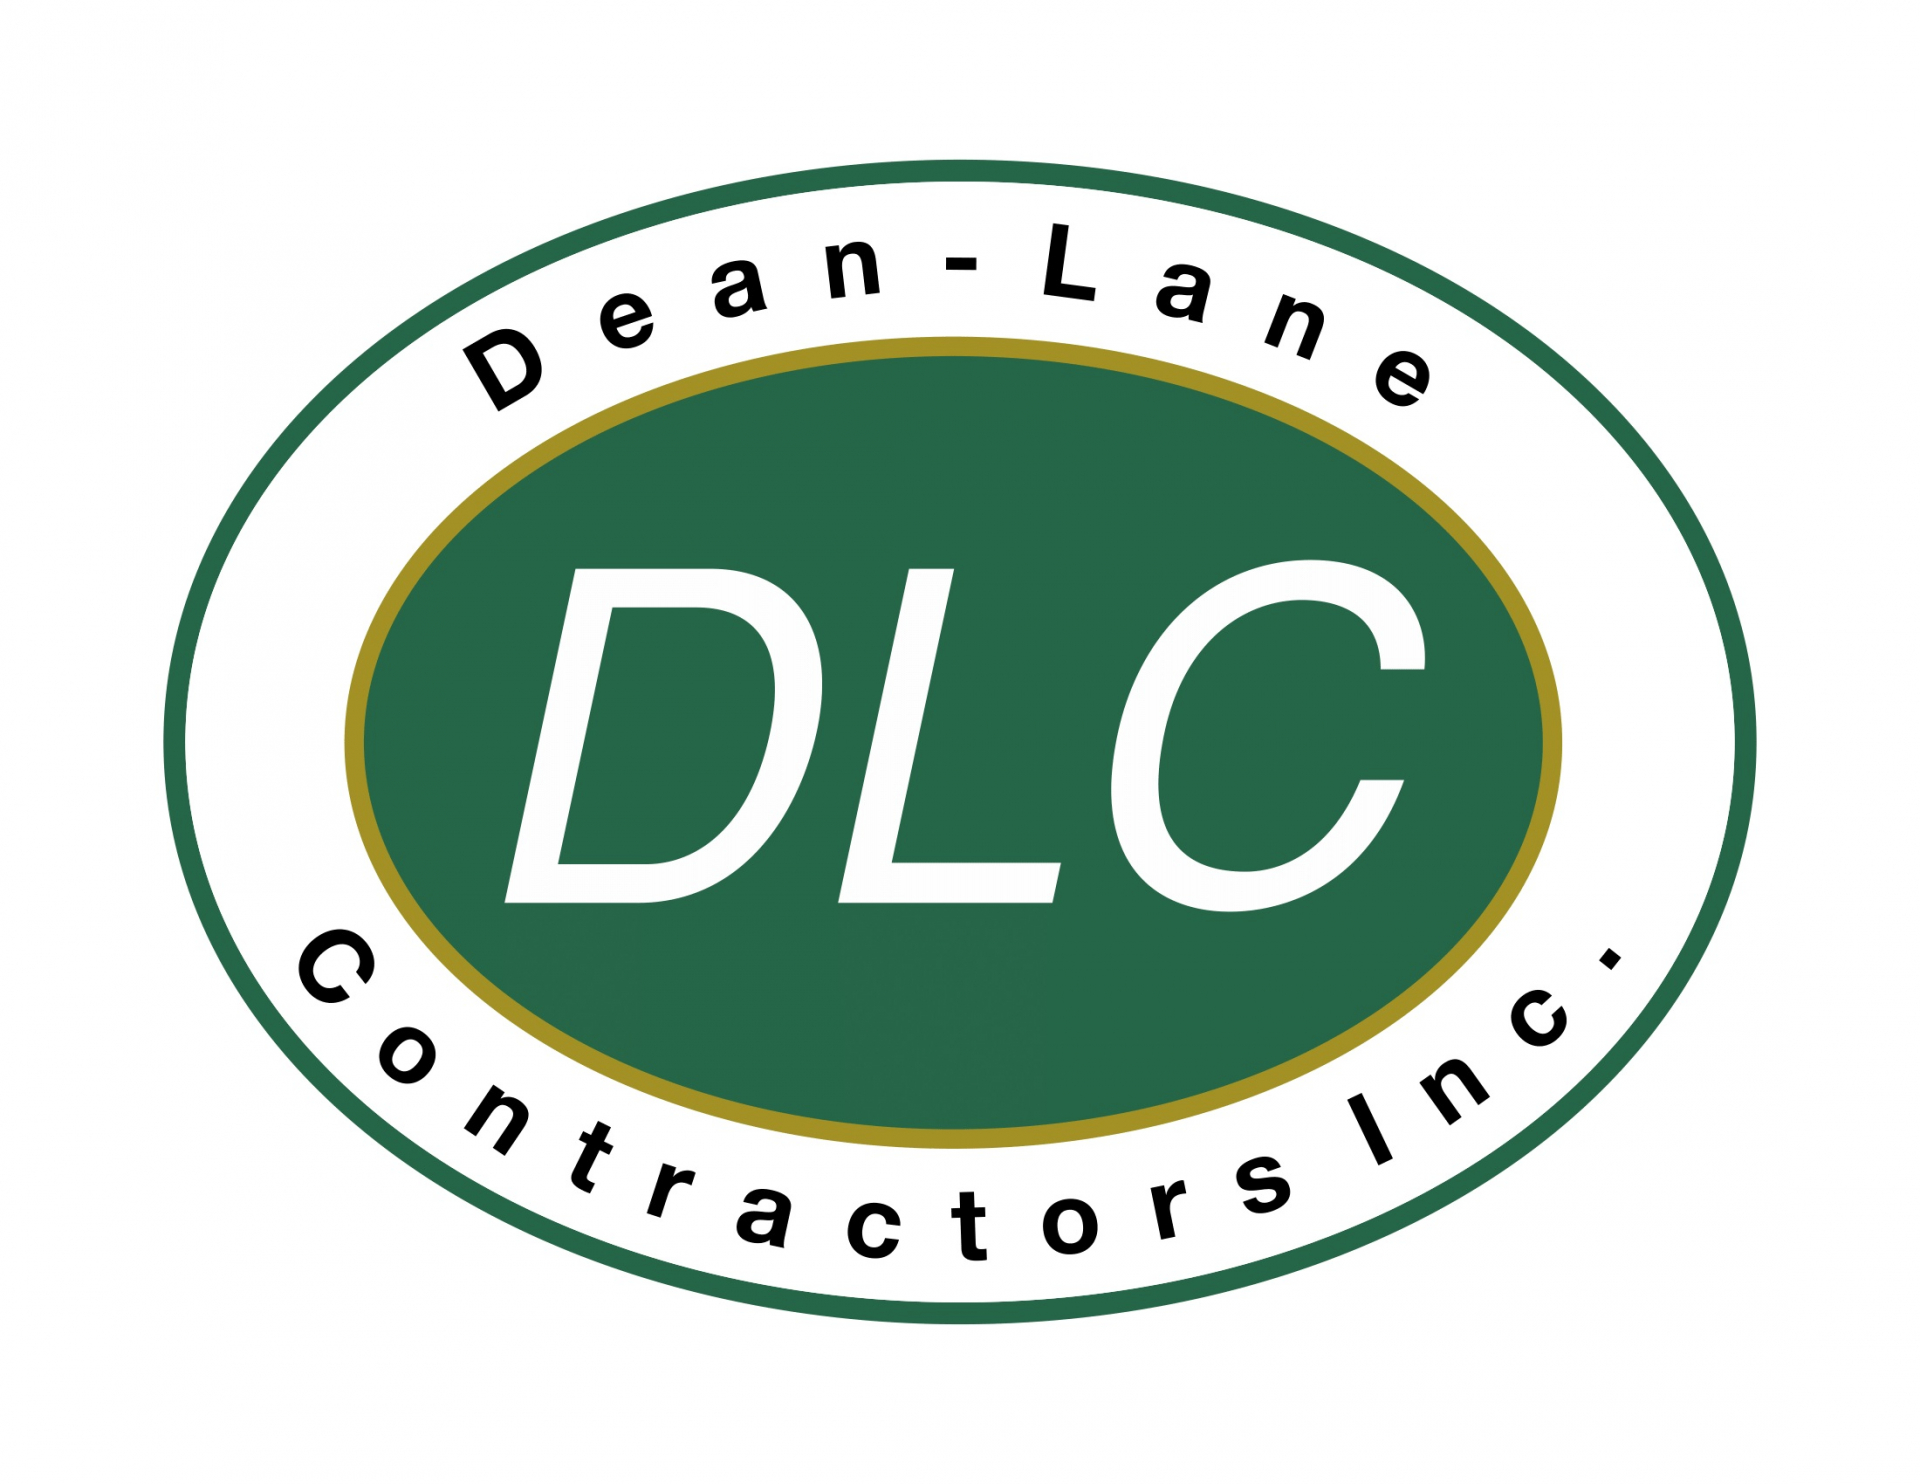 Dean Lane Contractors